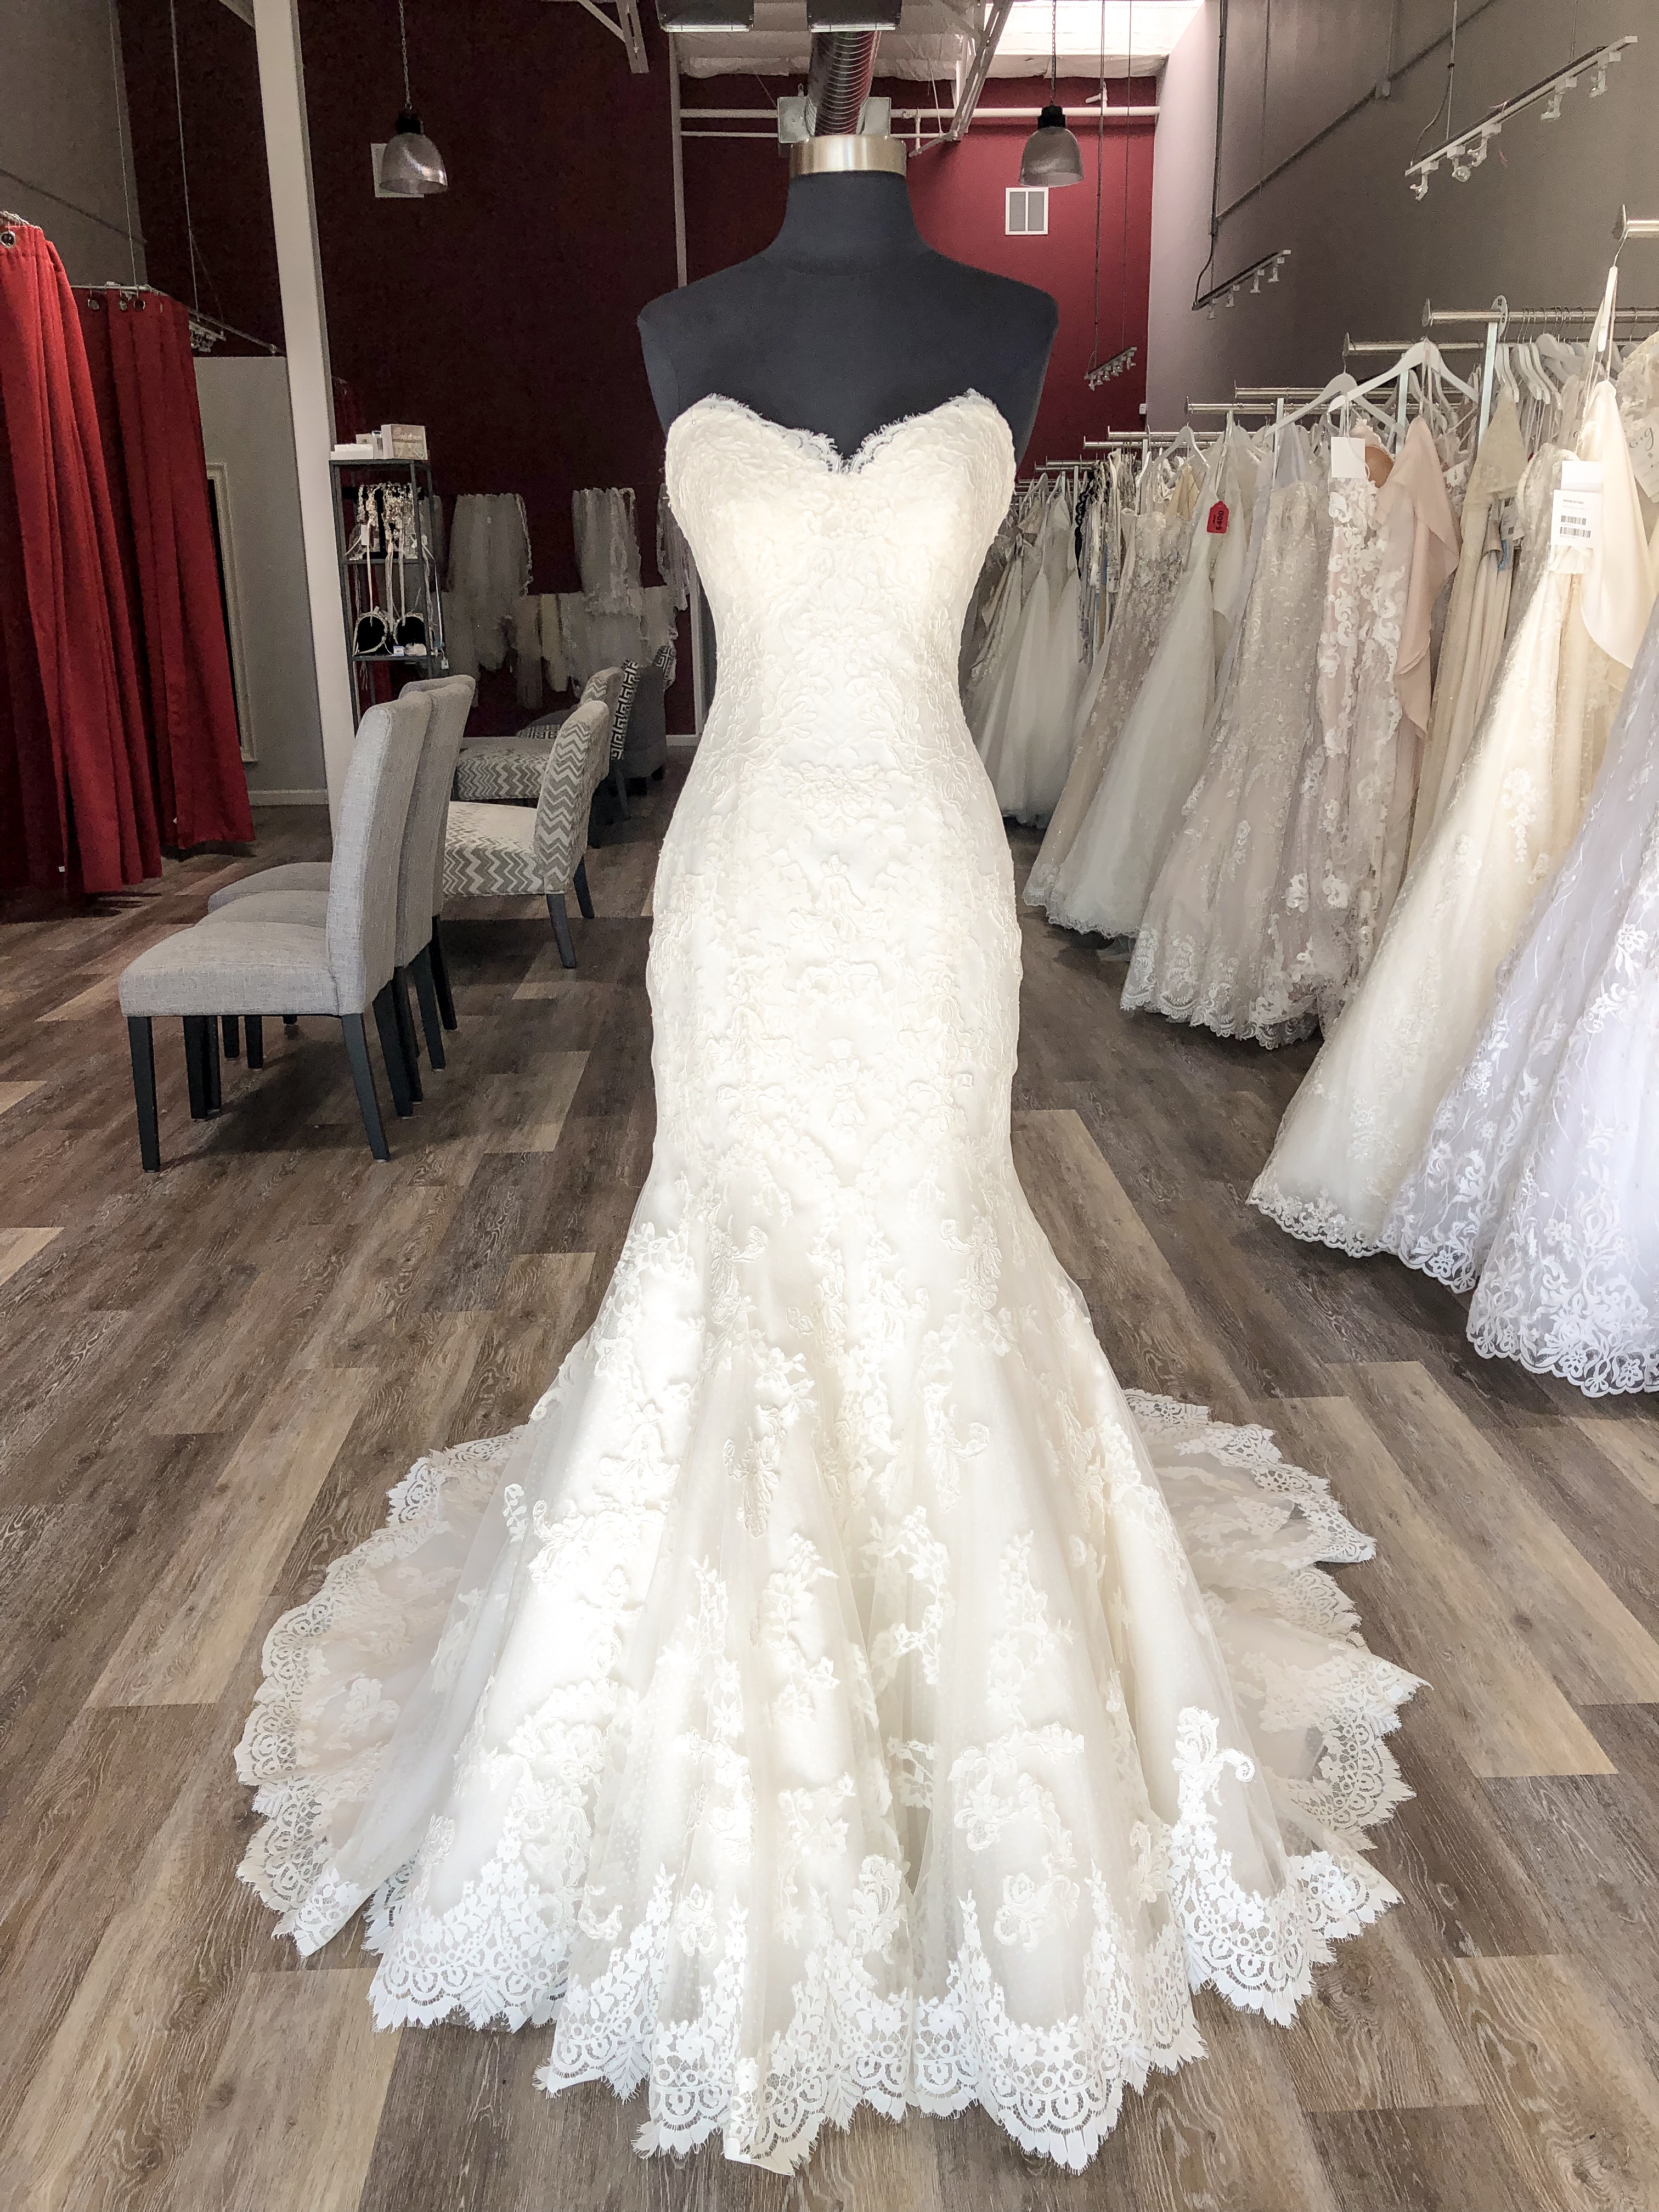 Wedding Outfit Shops Near Me Off 77 Best Deals Online